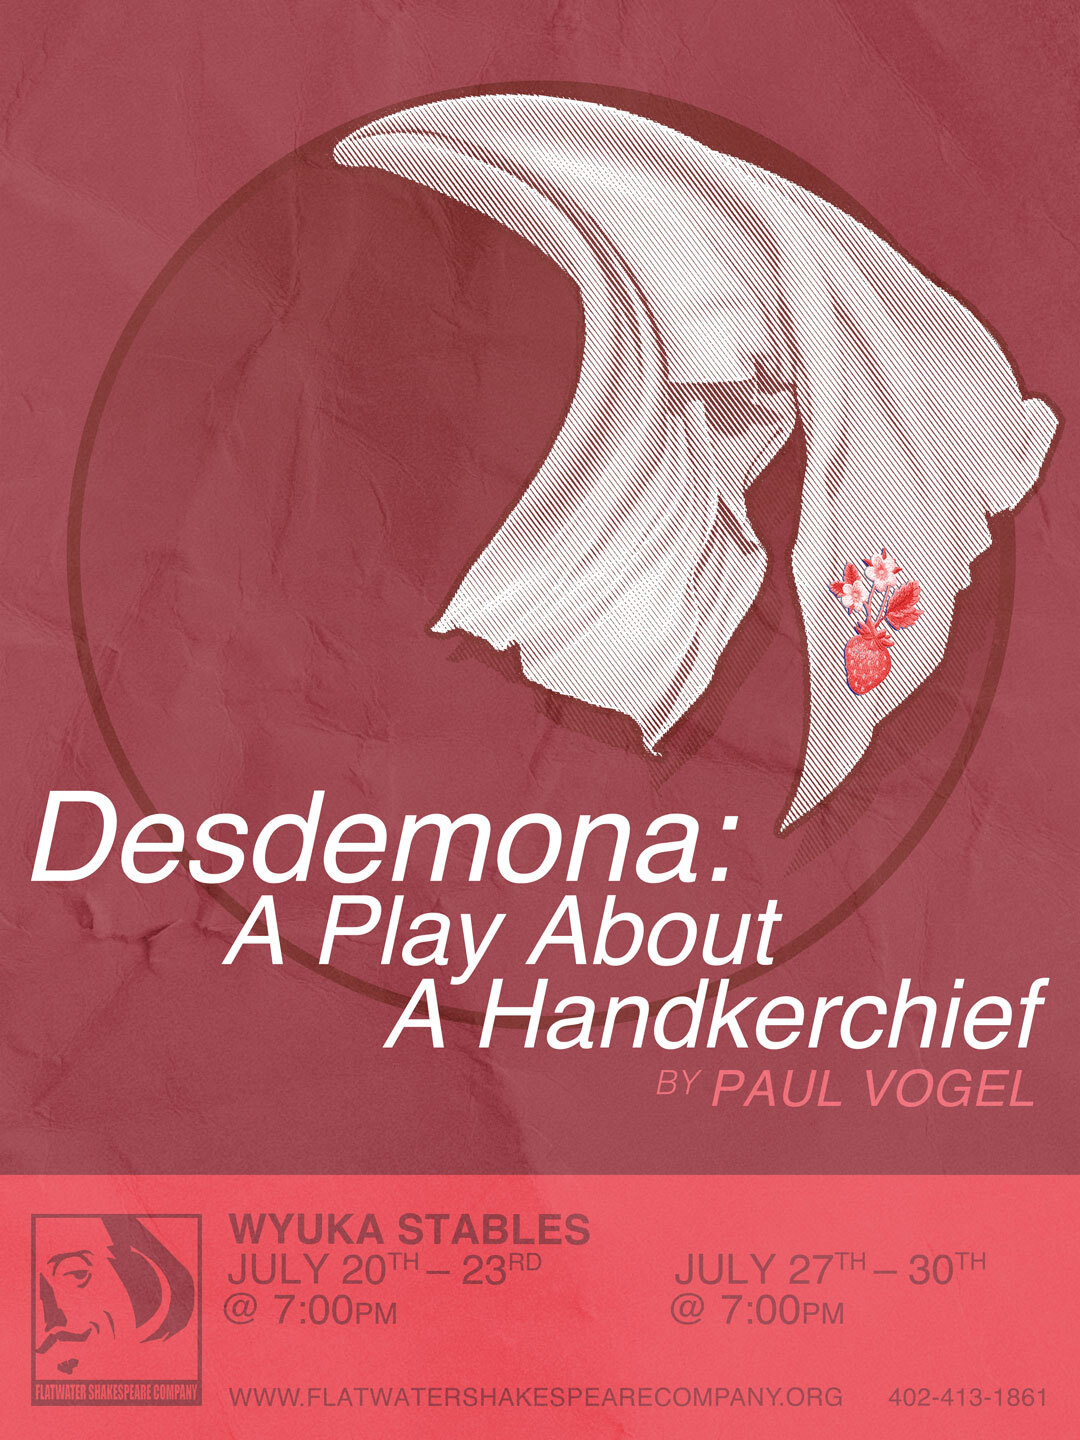 7/29 SEN - SENIOR (65+): Sat. July 29, 2023 | 7:00 p.m. - 10:00 p.m. CST | Wyuka Stables (Desdemona: A Play about a Handkerchief)